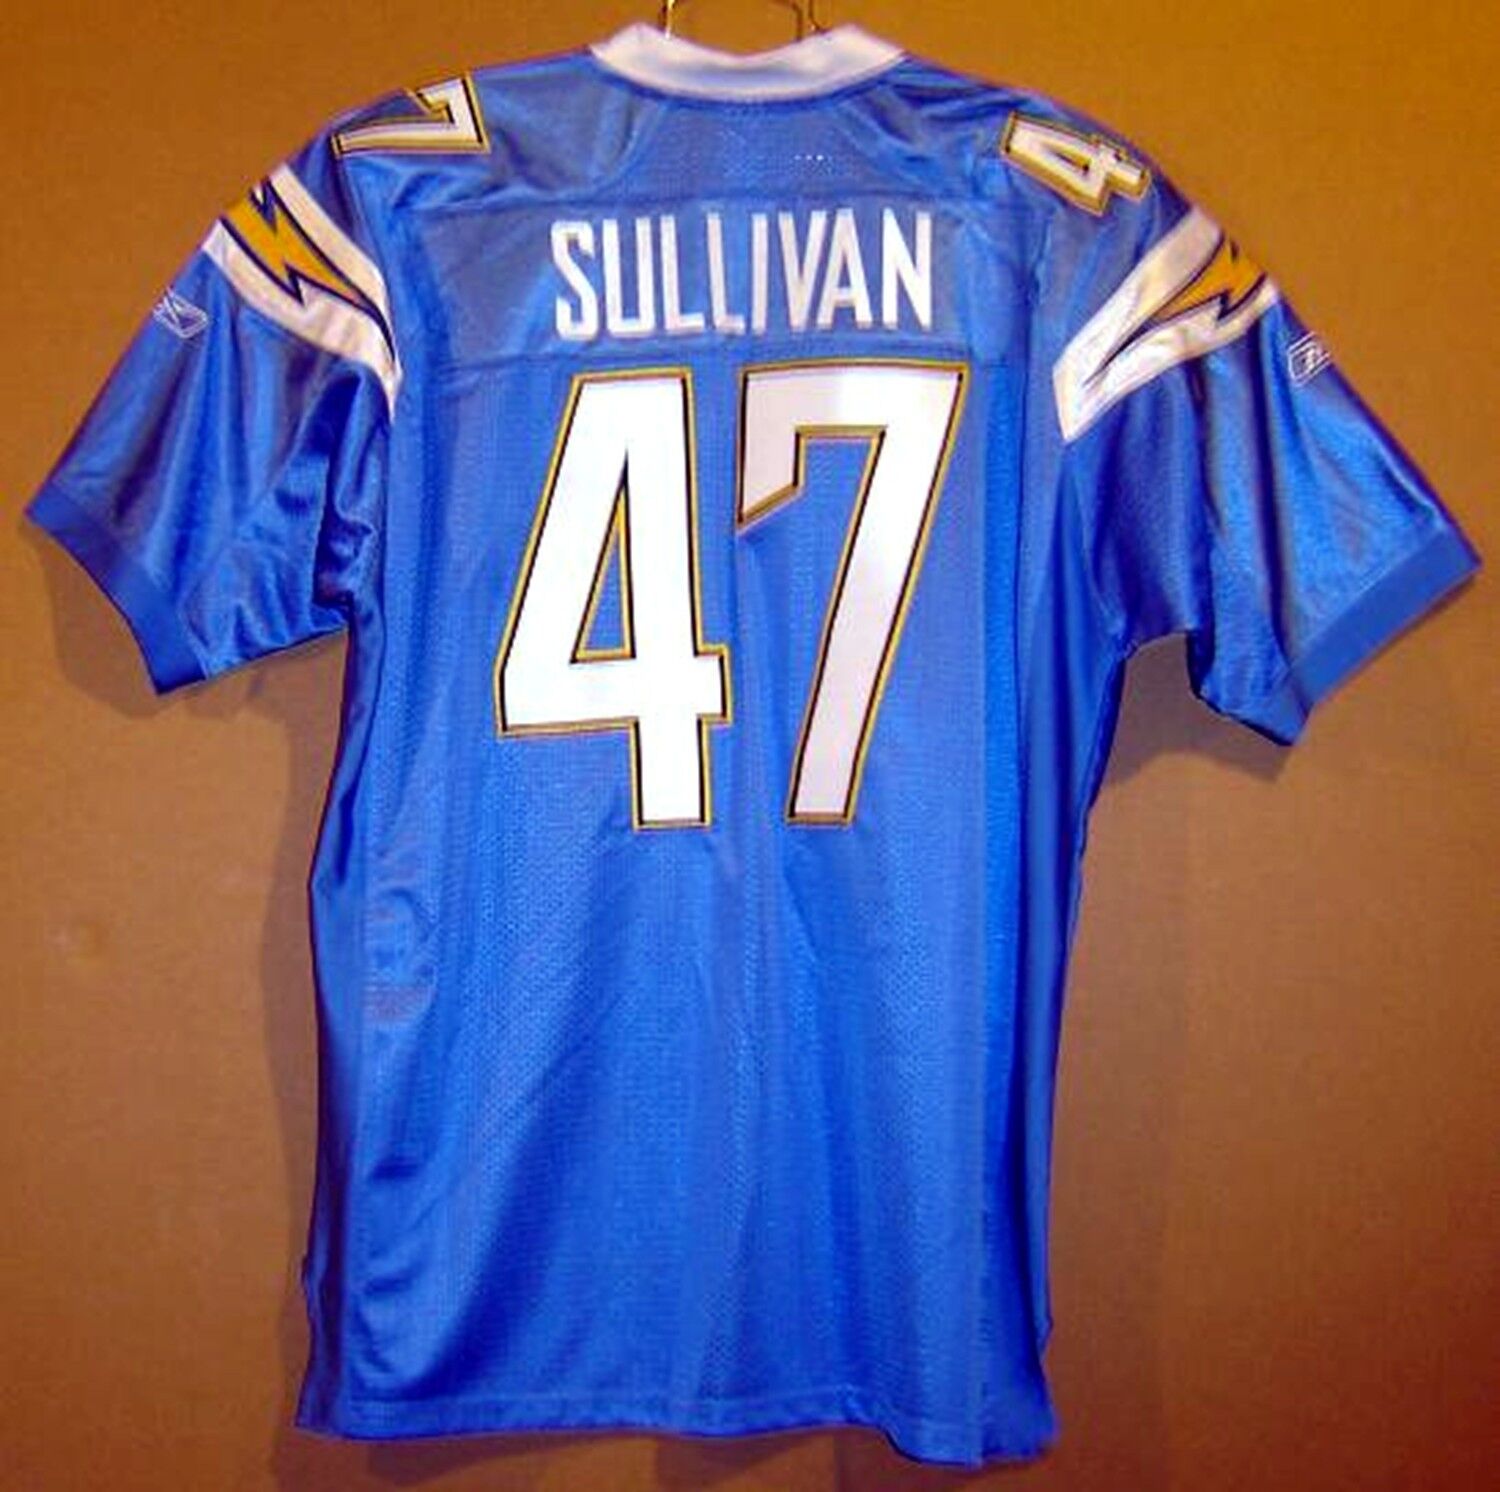 SAN DIEGO CHARGERS #47 SULLIVAN POWDER BLUE NFL Size 54 AUTHENTIC JERSEY